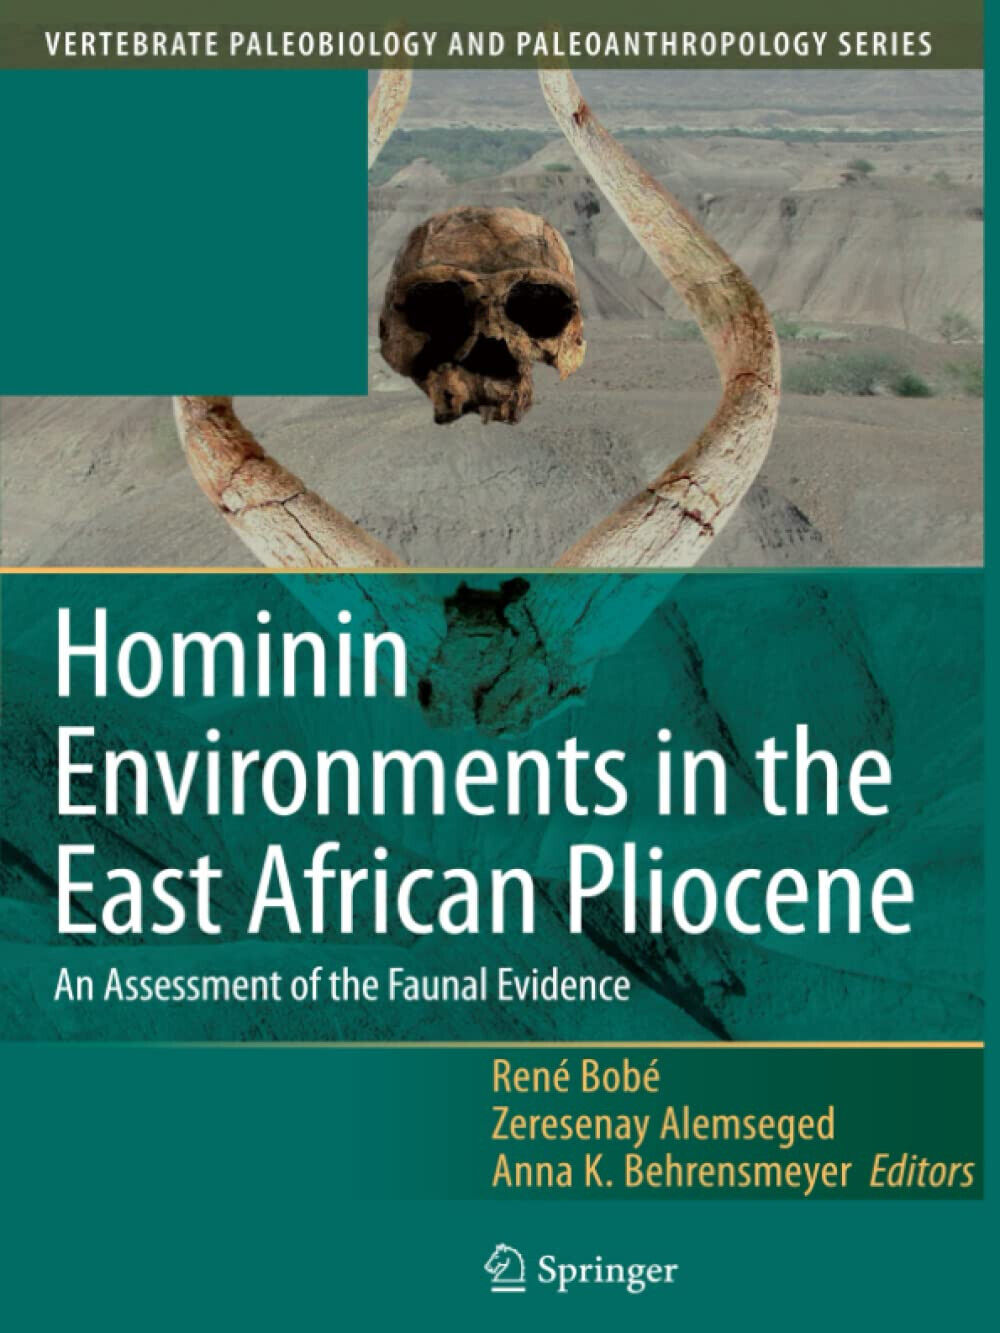 Hominin Environments in the East African Pliocene - Rene Bobe - Springer, 2011 libro usato